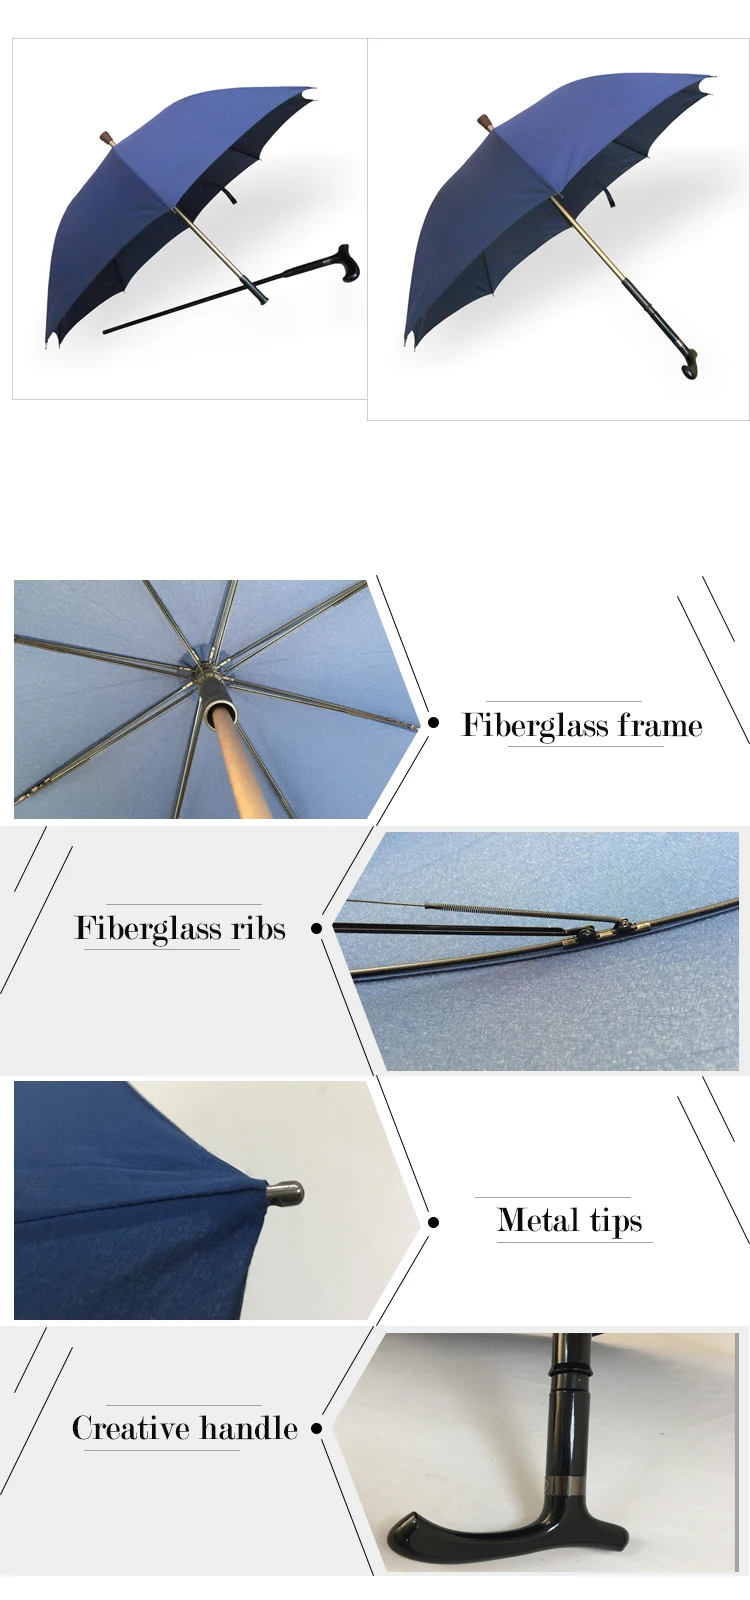 WU-01 multi function anti-slip separable walking stick umbrella